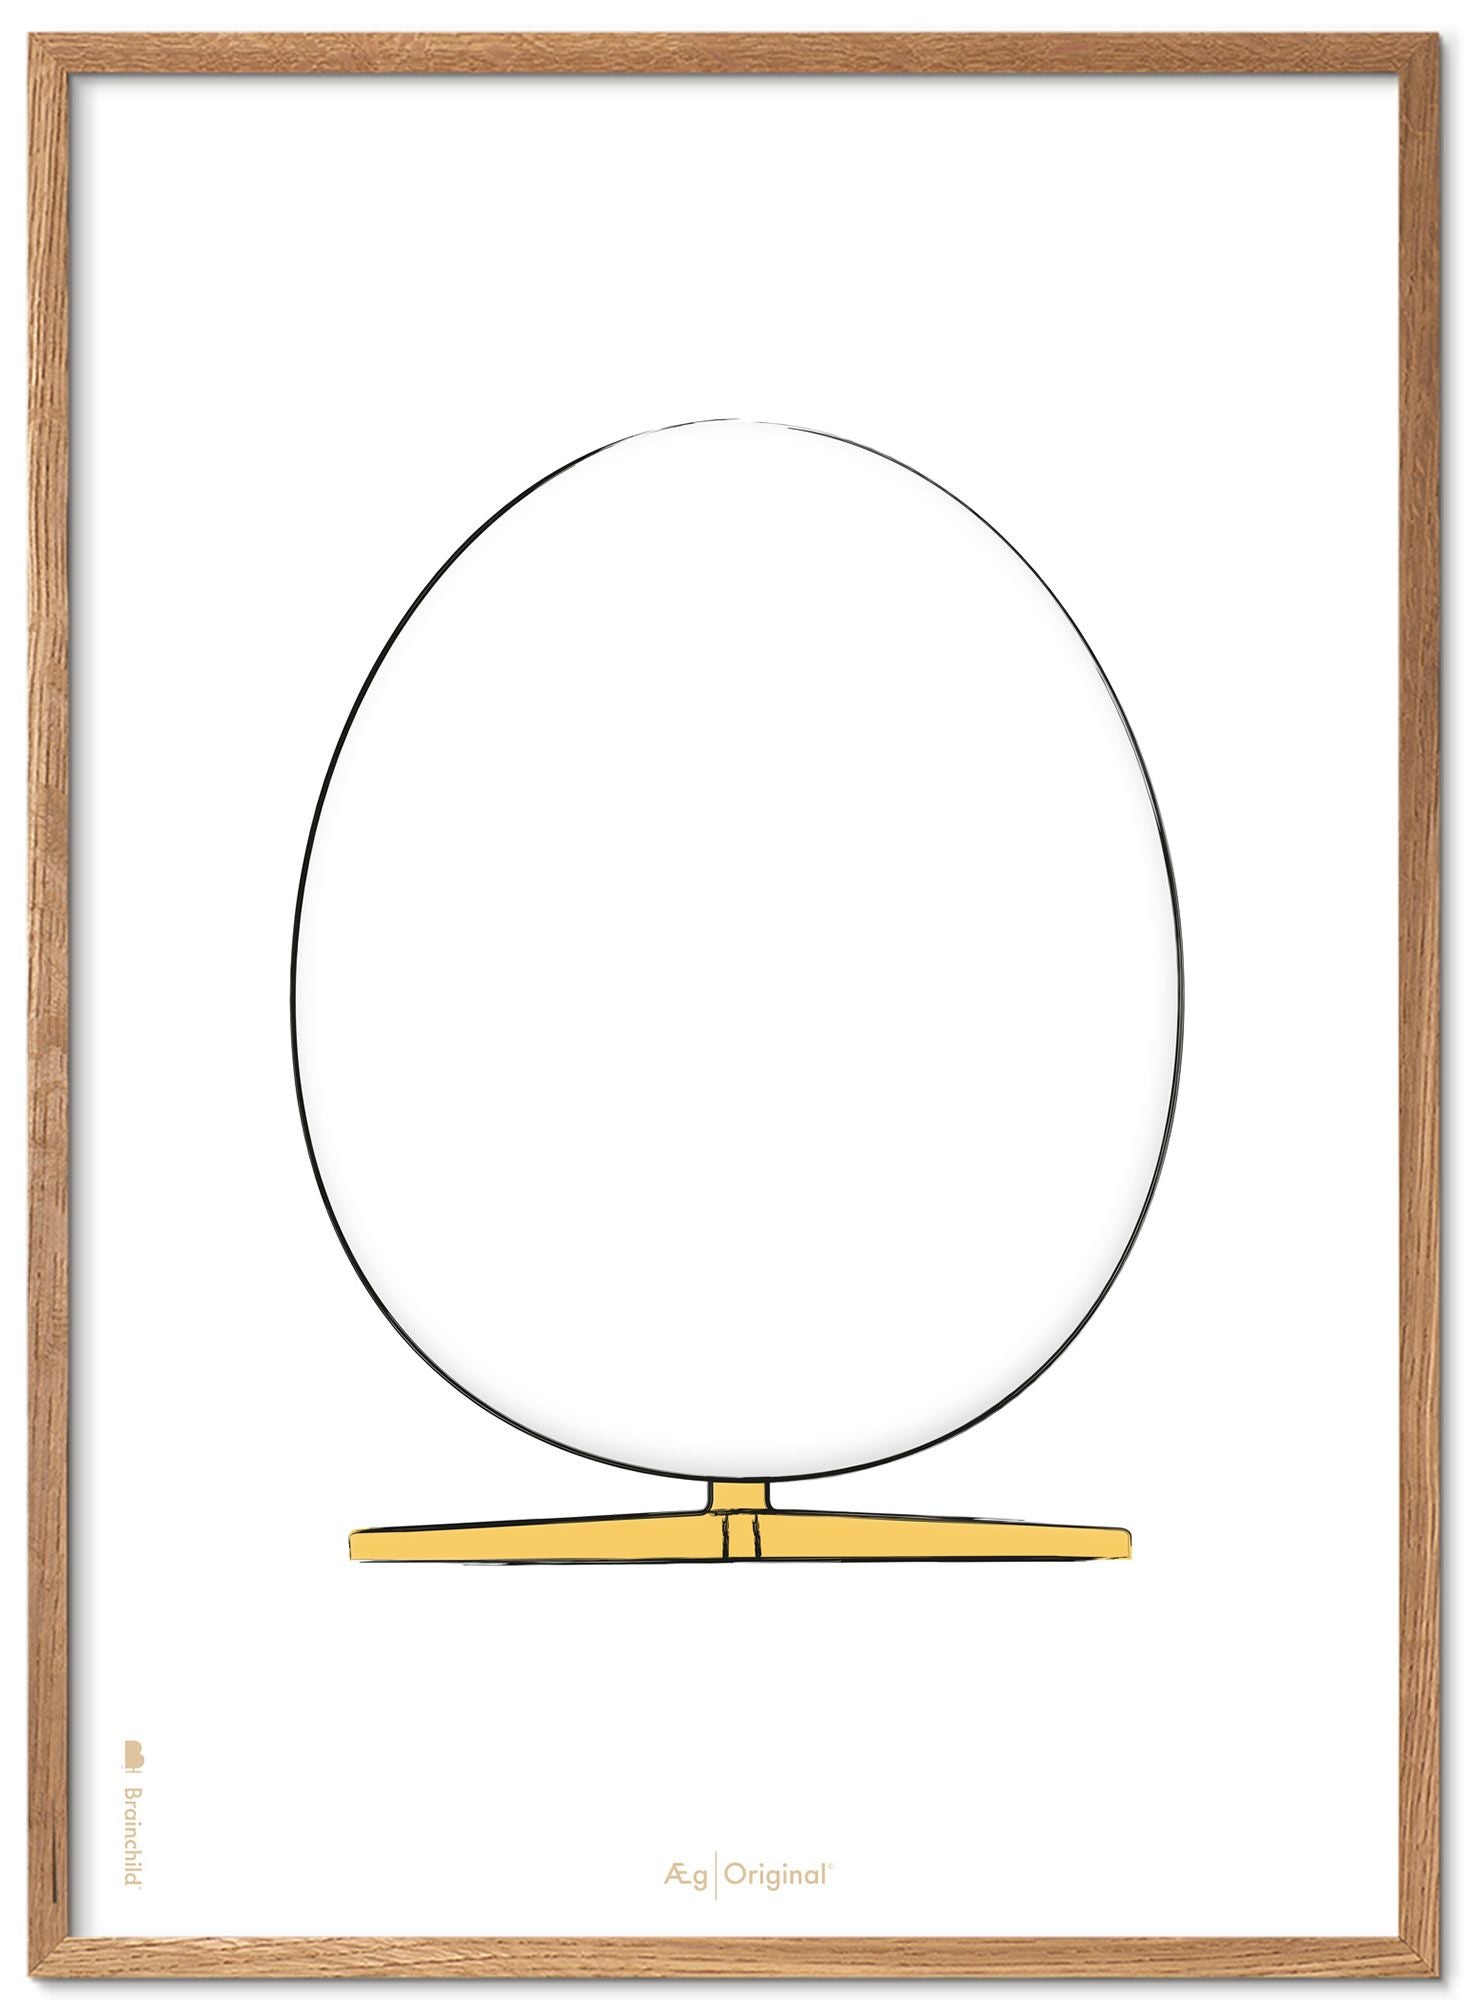 Brainchild The Egg Design Sketch Poster Frame Made Of Light Wood 30x40 Cm, White Background